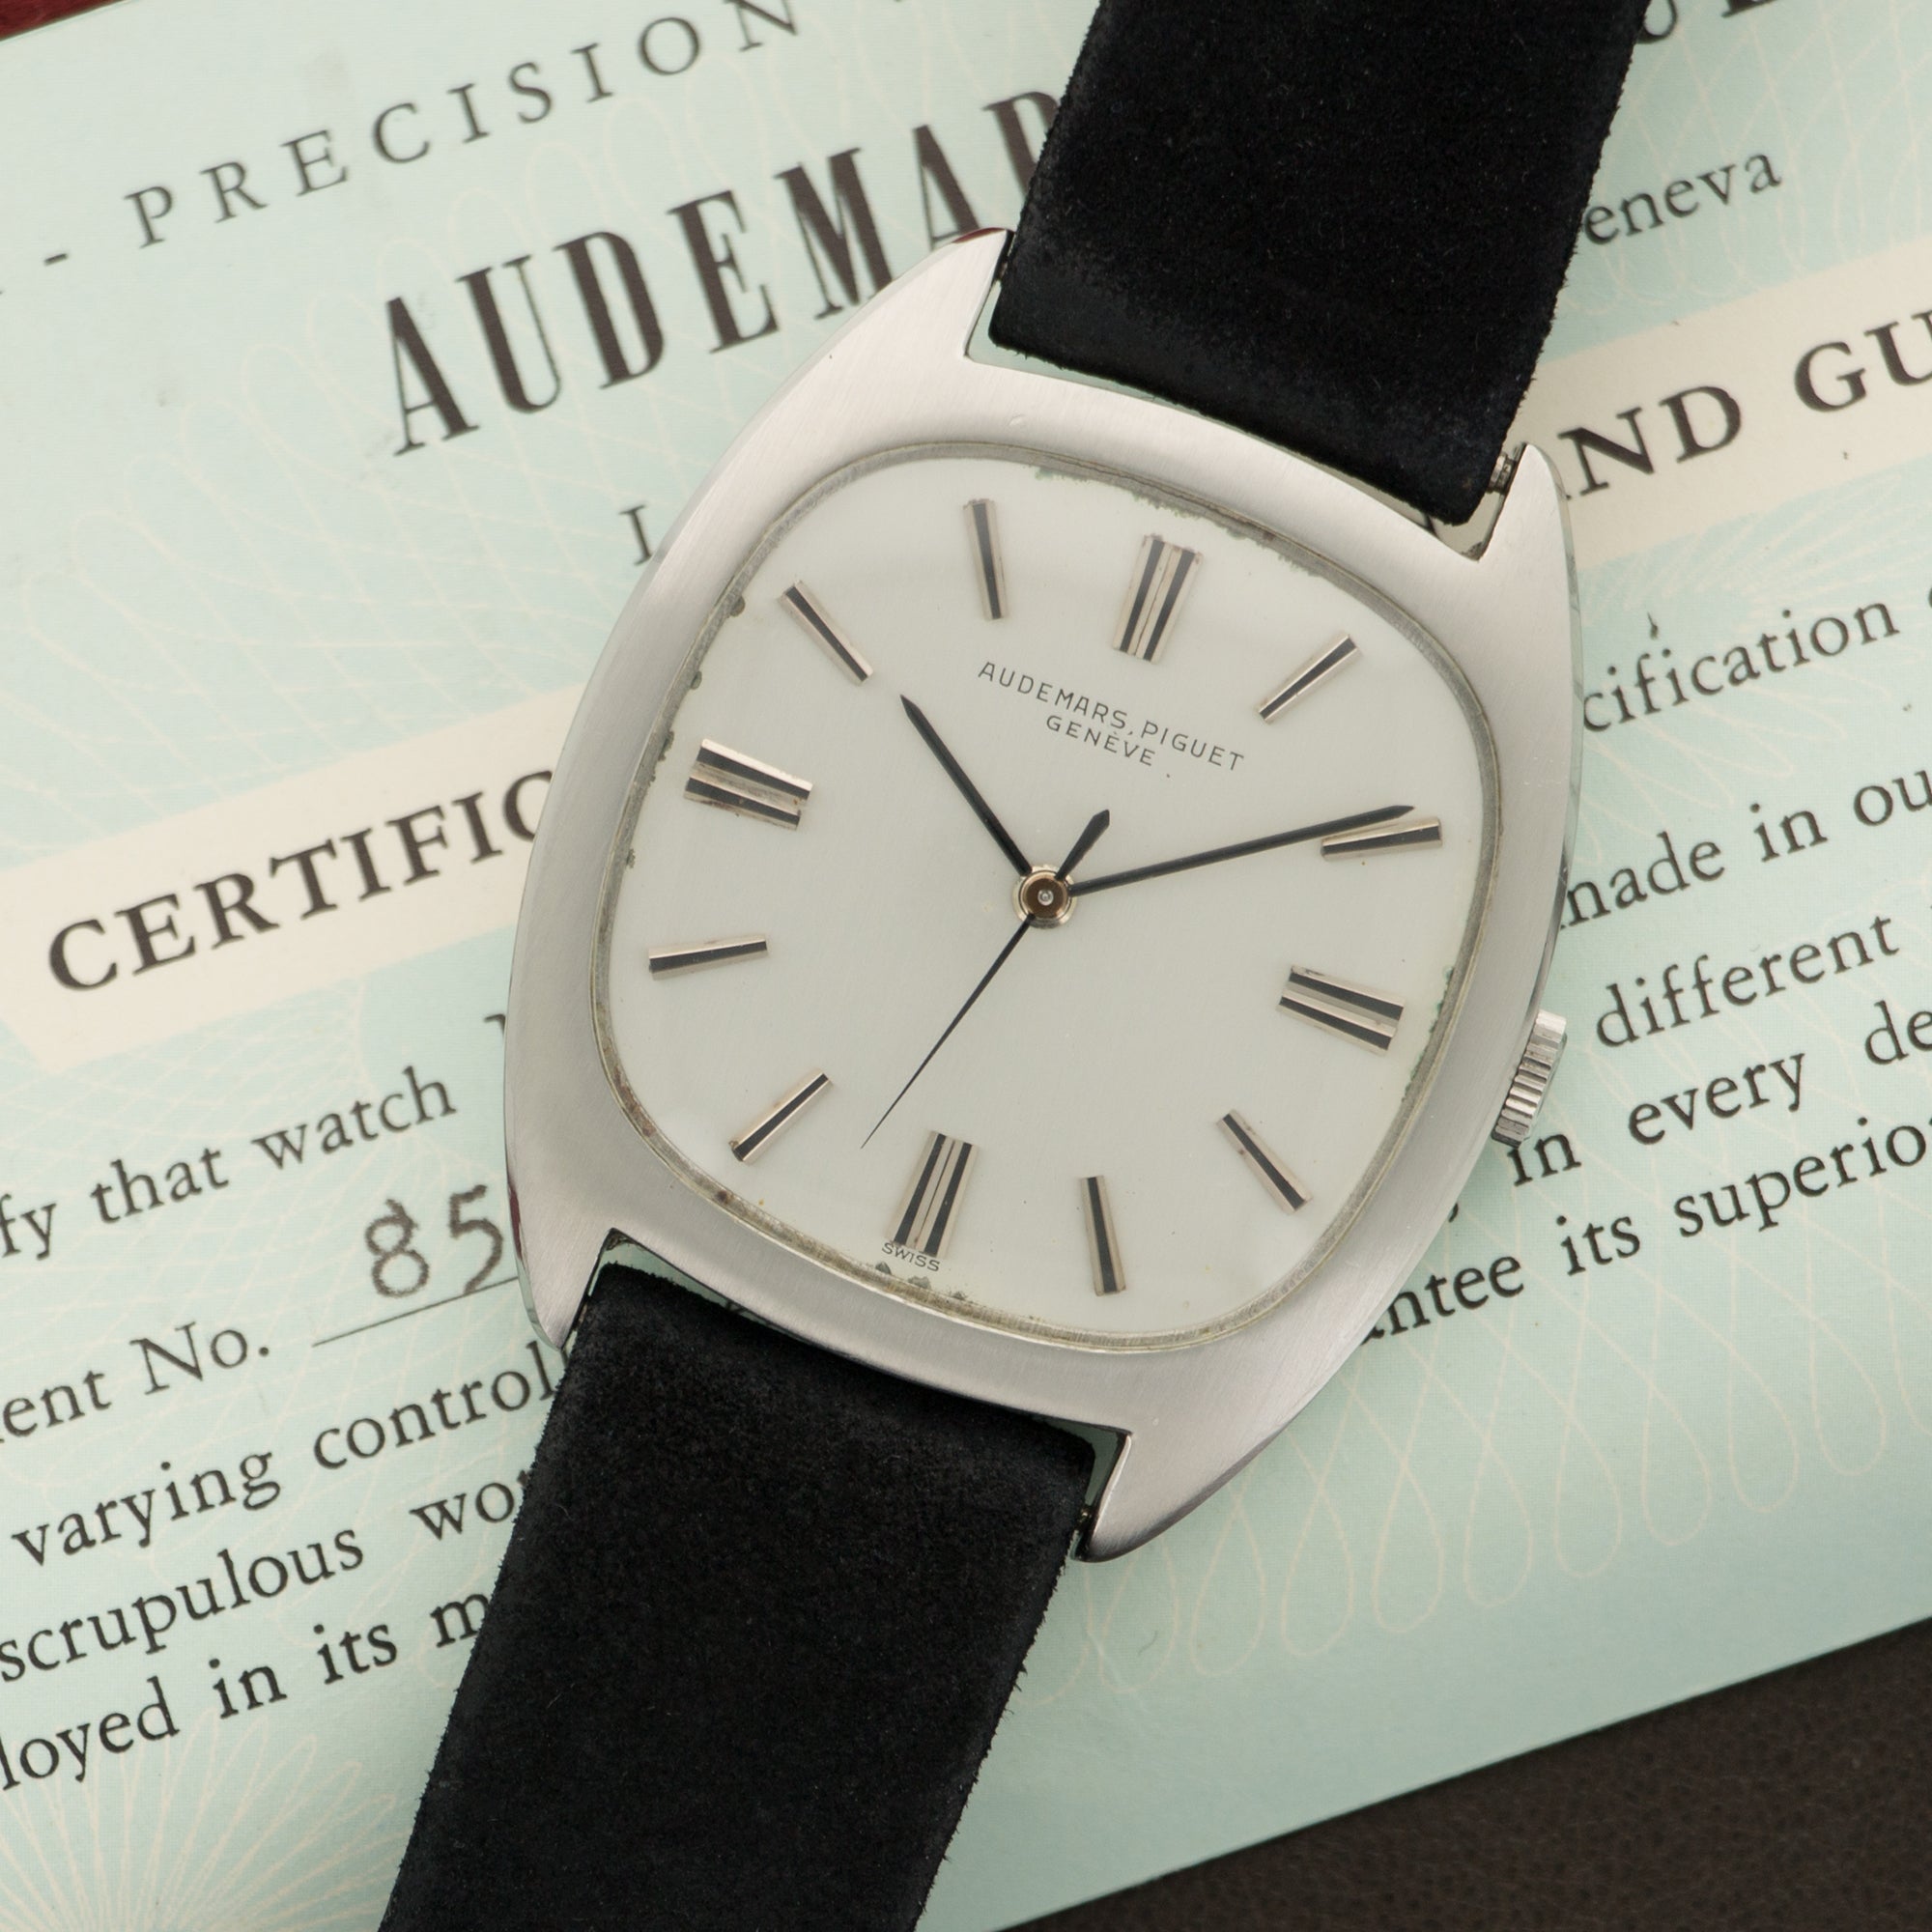 Audemars Piguet - Audemars Piguet Steel Cushion Shaped Strap Watch with Original Box & Papers - The Keystone Watches